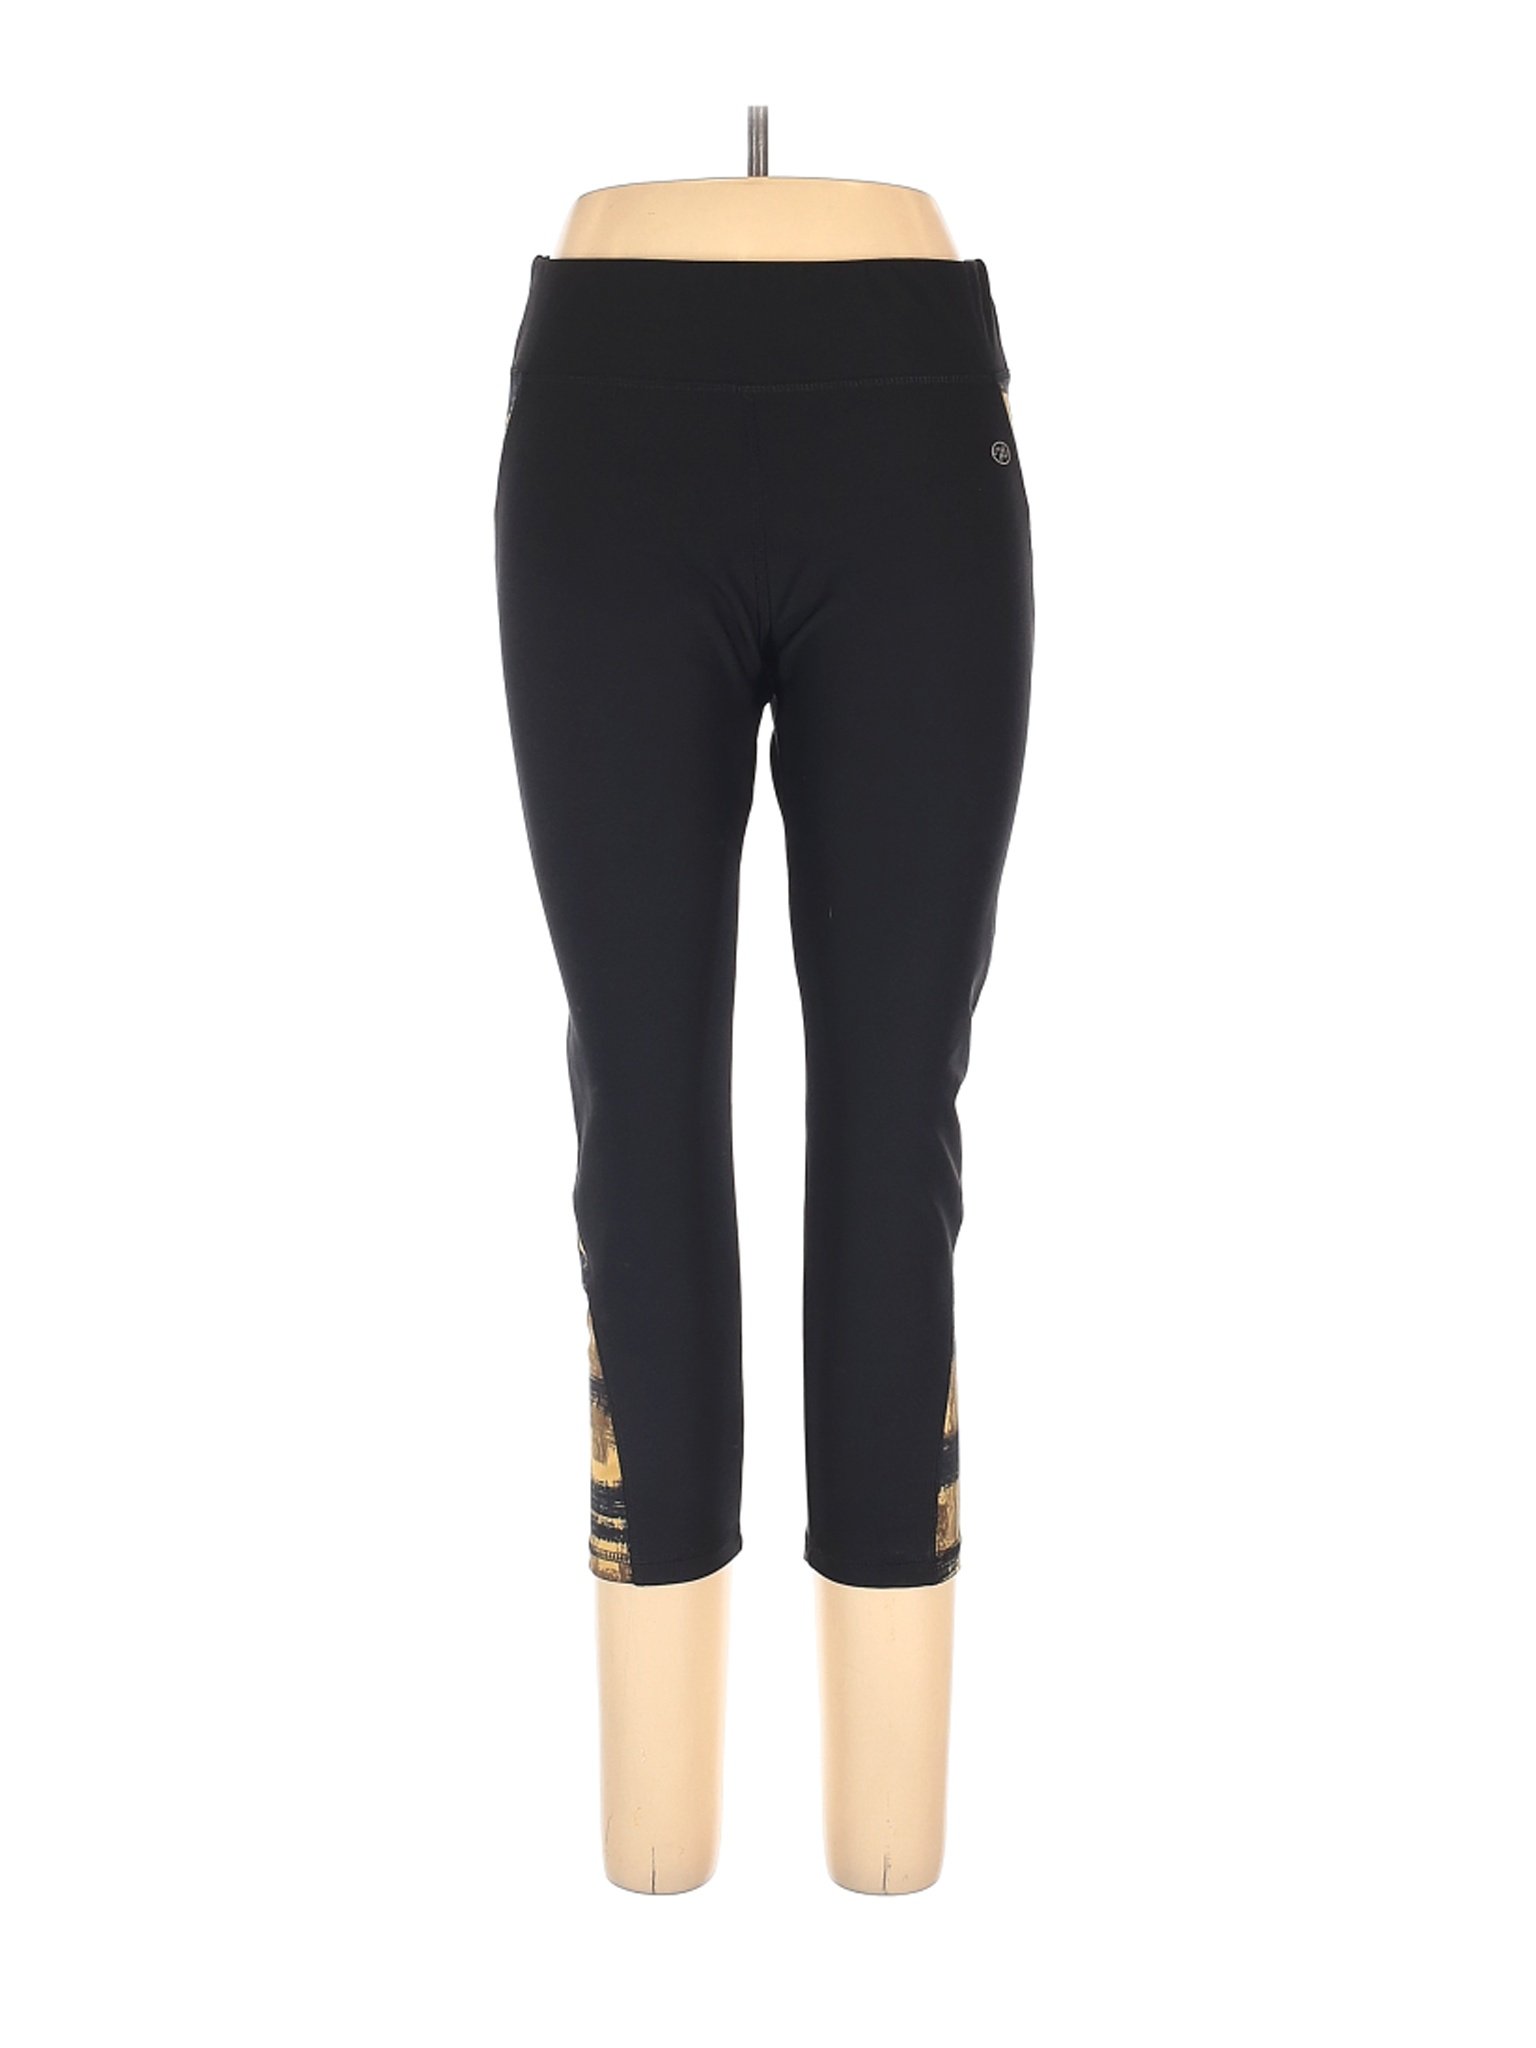 N.Y.L Sport Women Black Active Pants XL | eBay